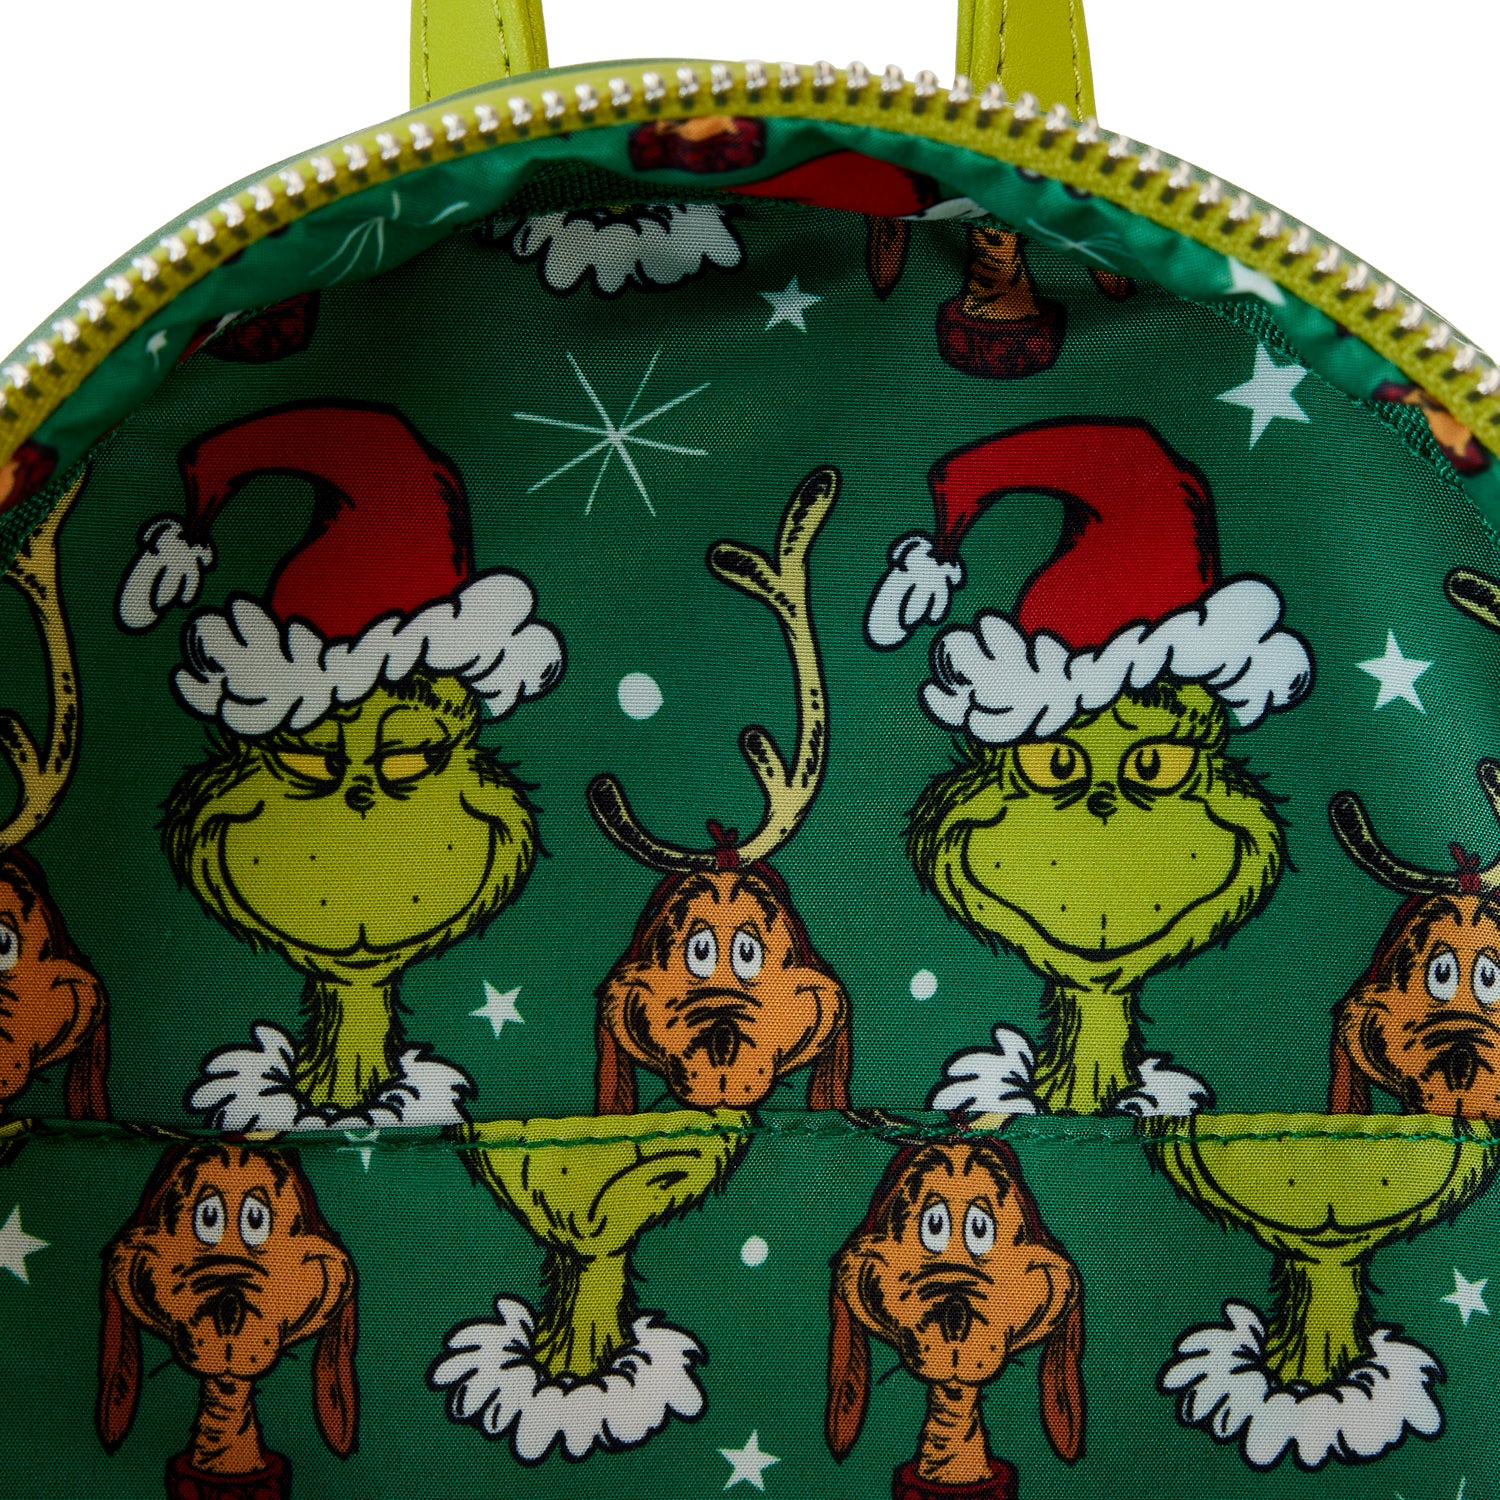 Dr. Seuss | How The Grinch Stole Christmas Santa Cosplay Mini Backpack